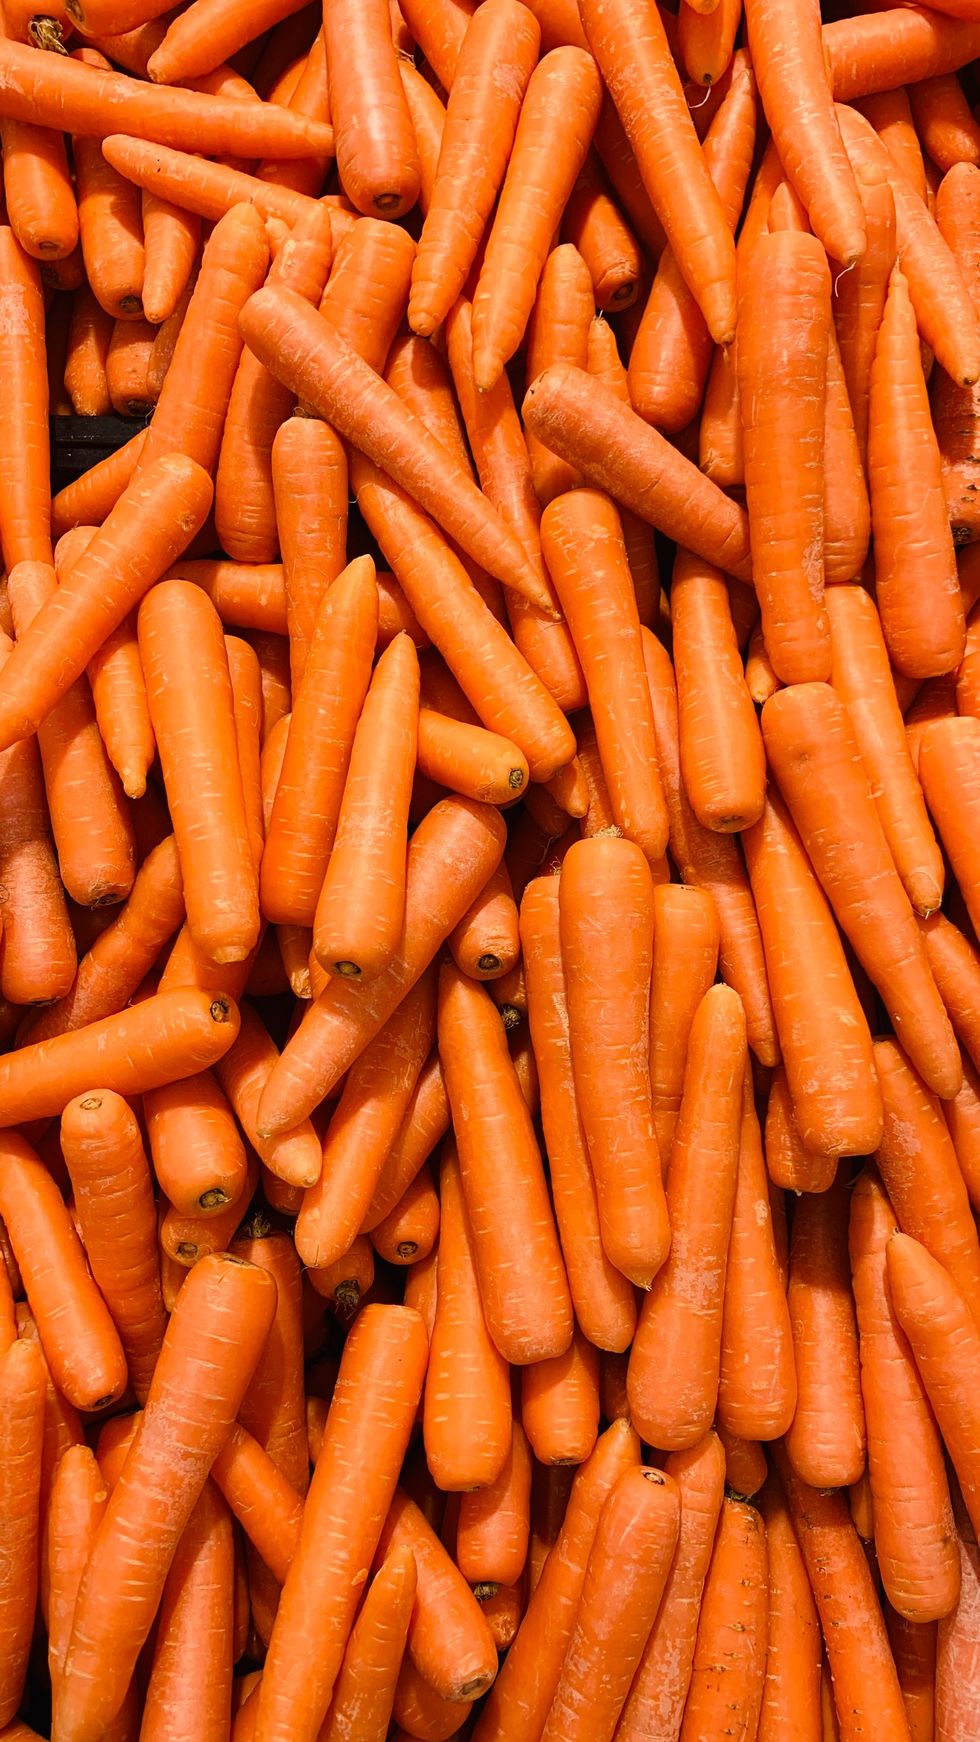 lots of carrot sticks close up full frame orange